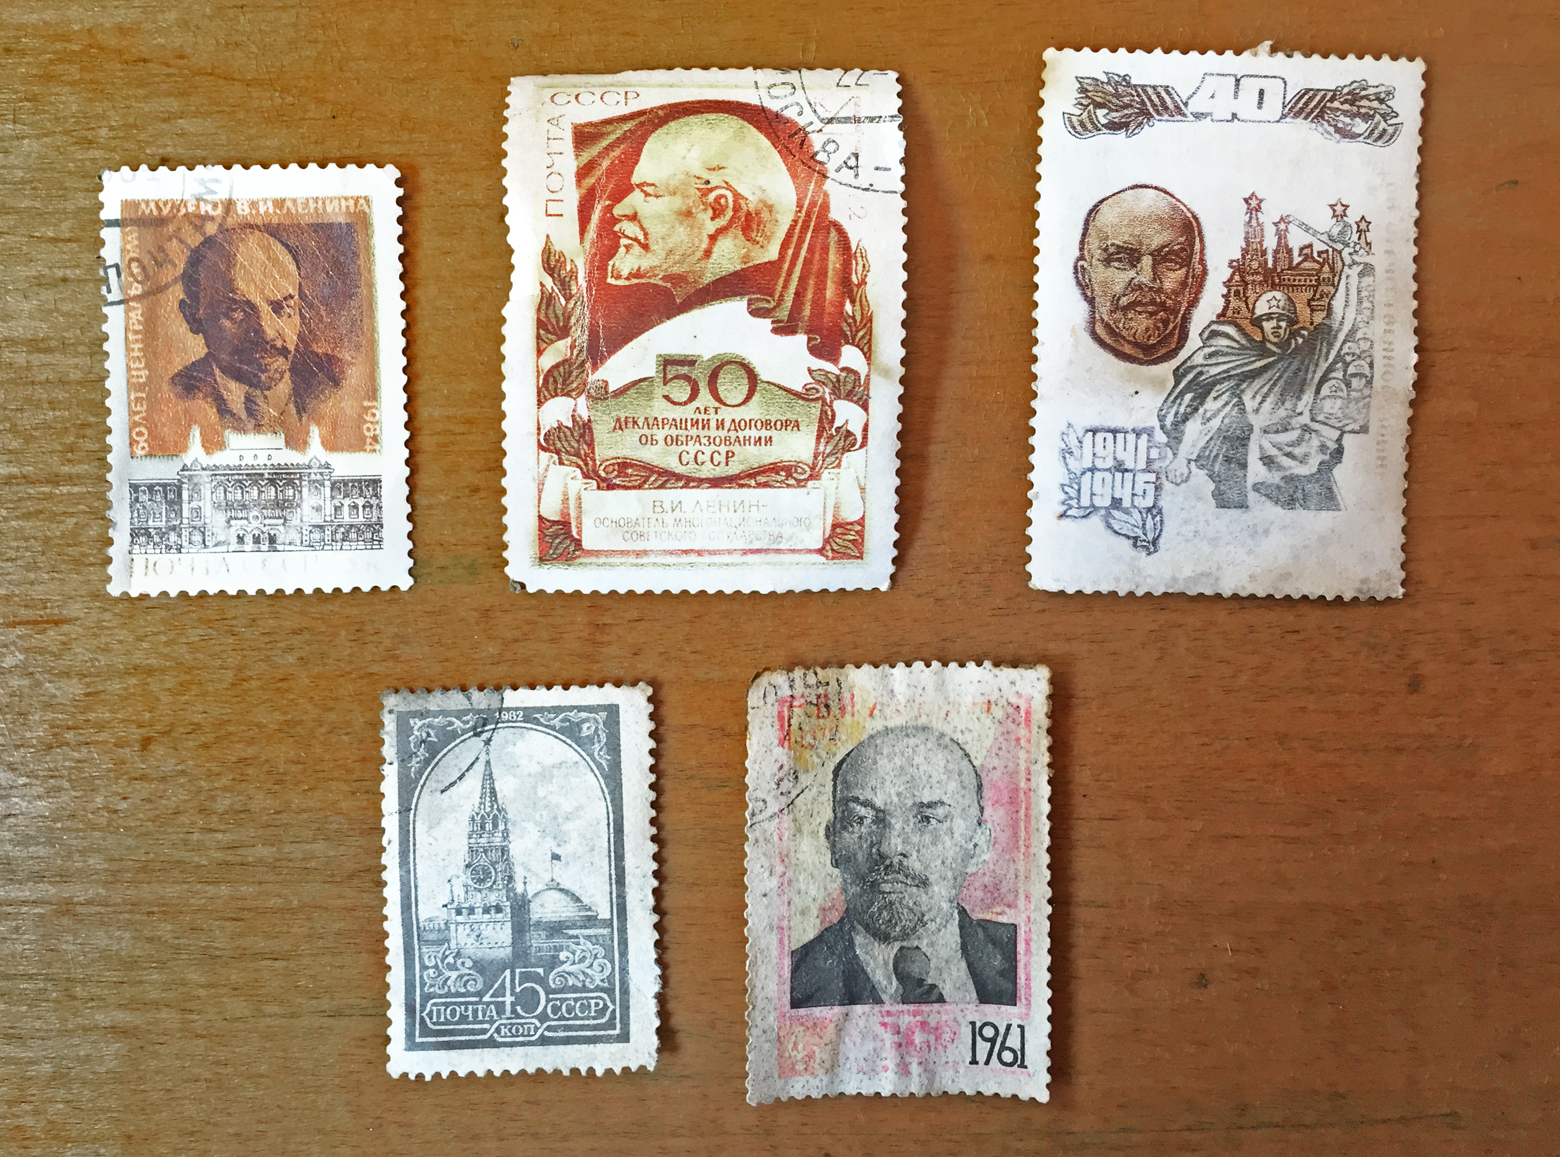 Chernobyl Stamps